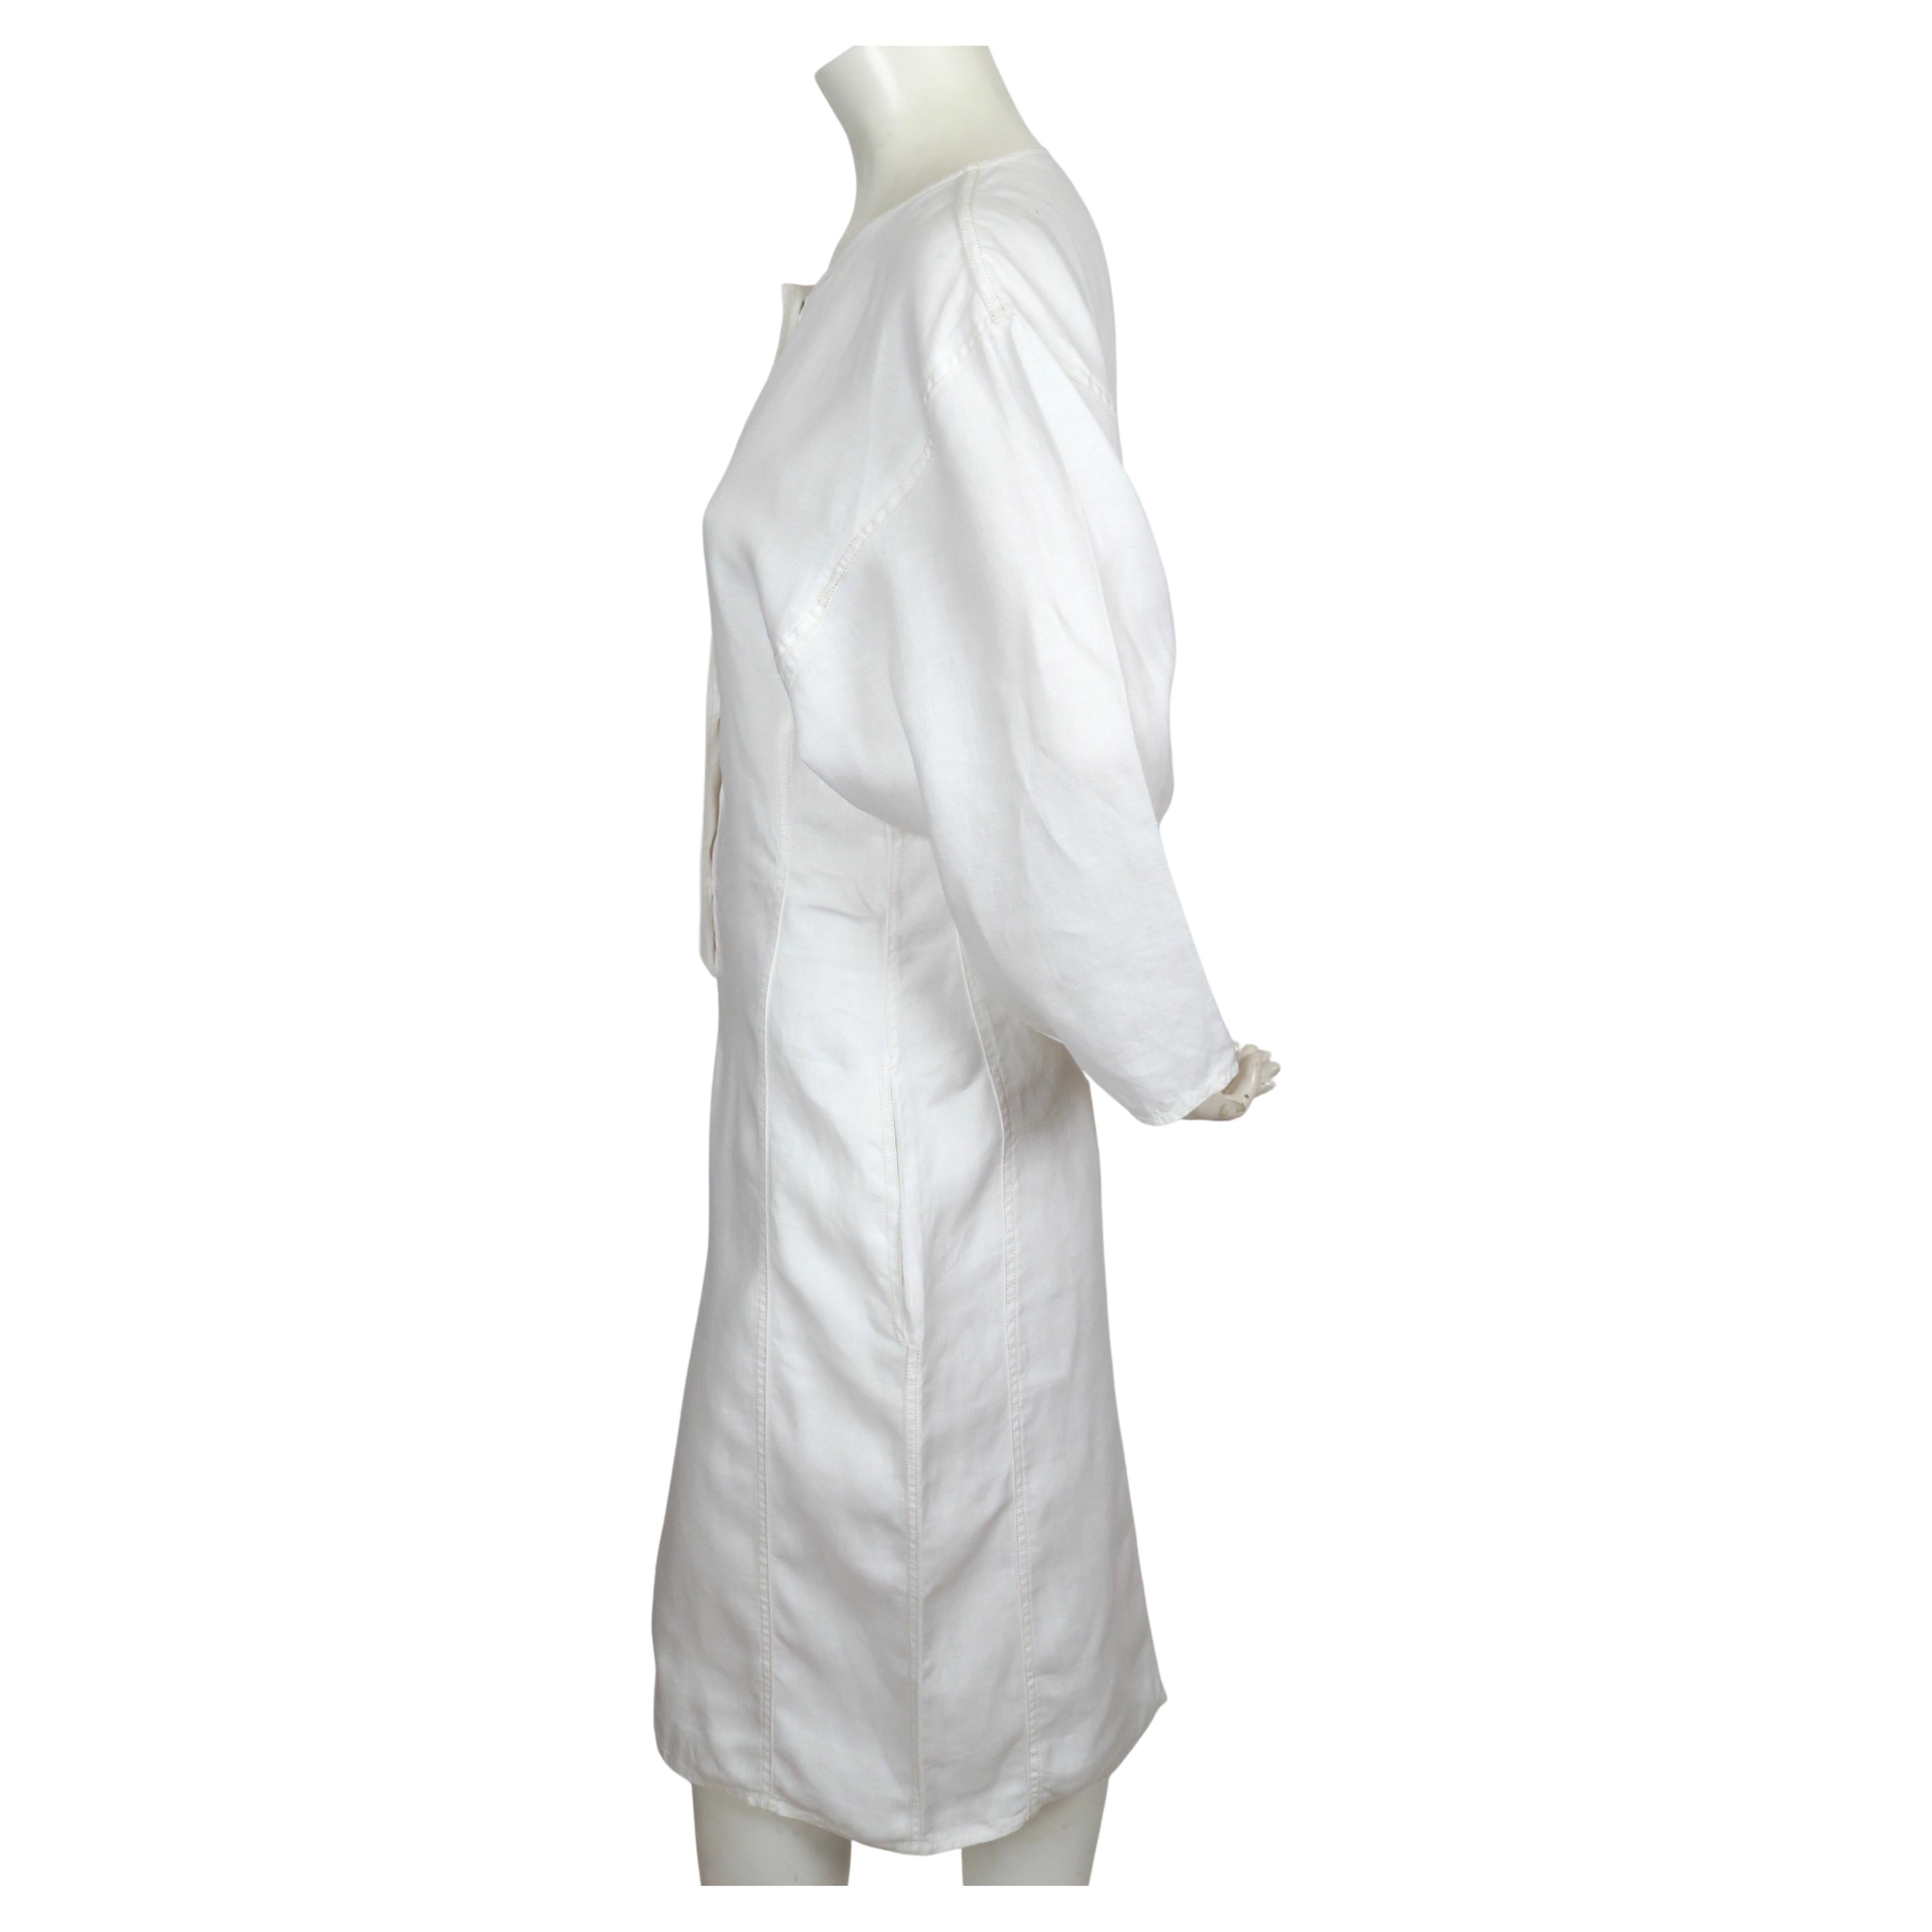 1980's ANNE MARIE BERETTA white linen dress For Sale 1